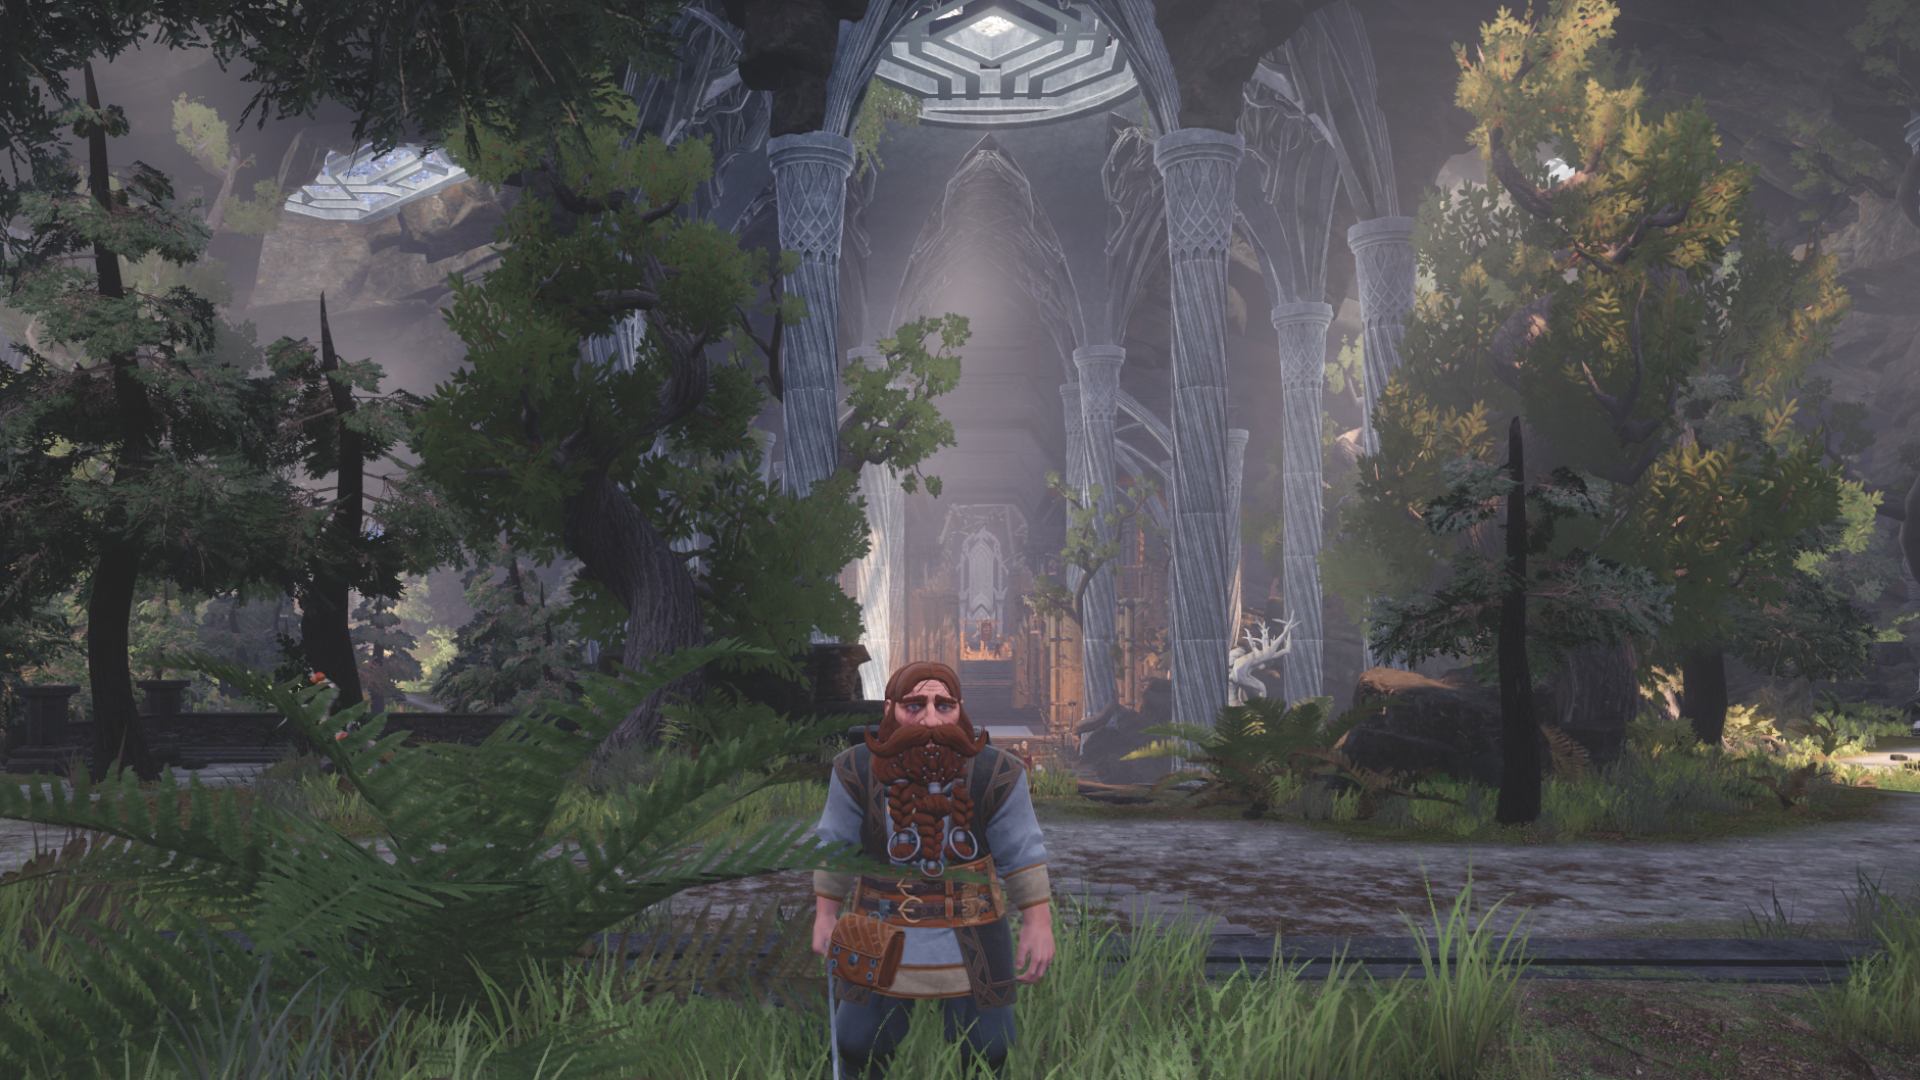 Dwarf standing in elven grotto